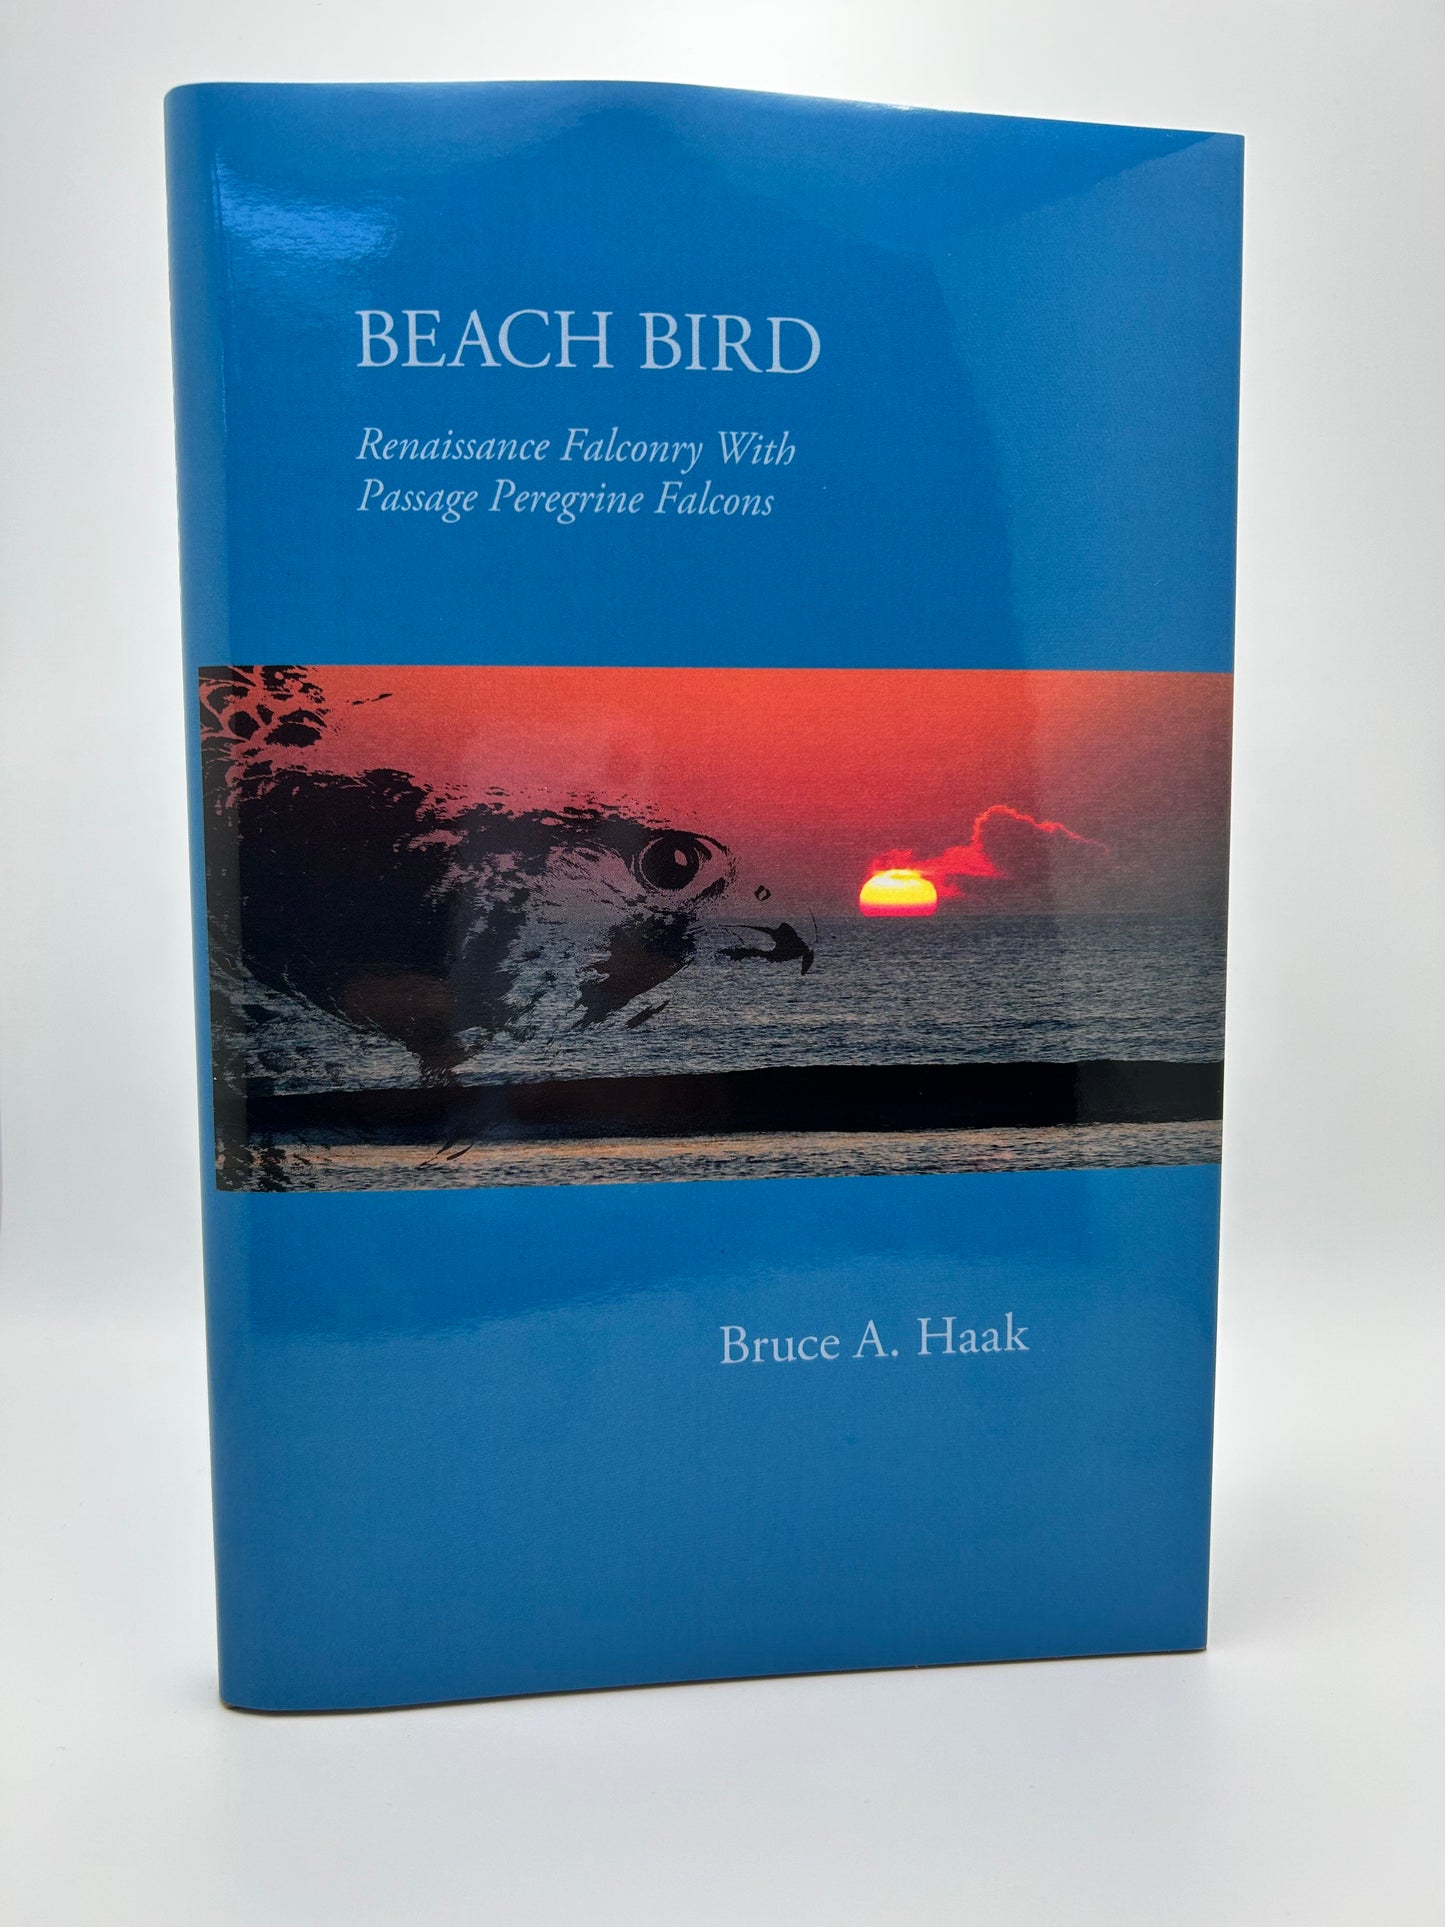 Beach Bird: Renaissance Falconry With Passage Peregrine Falcons